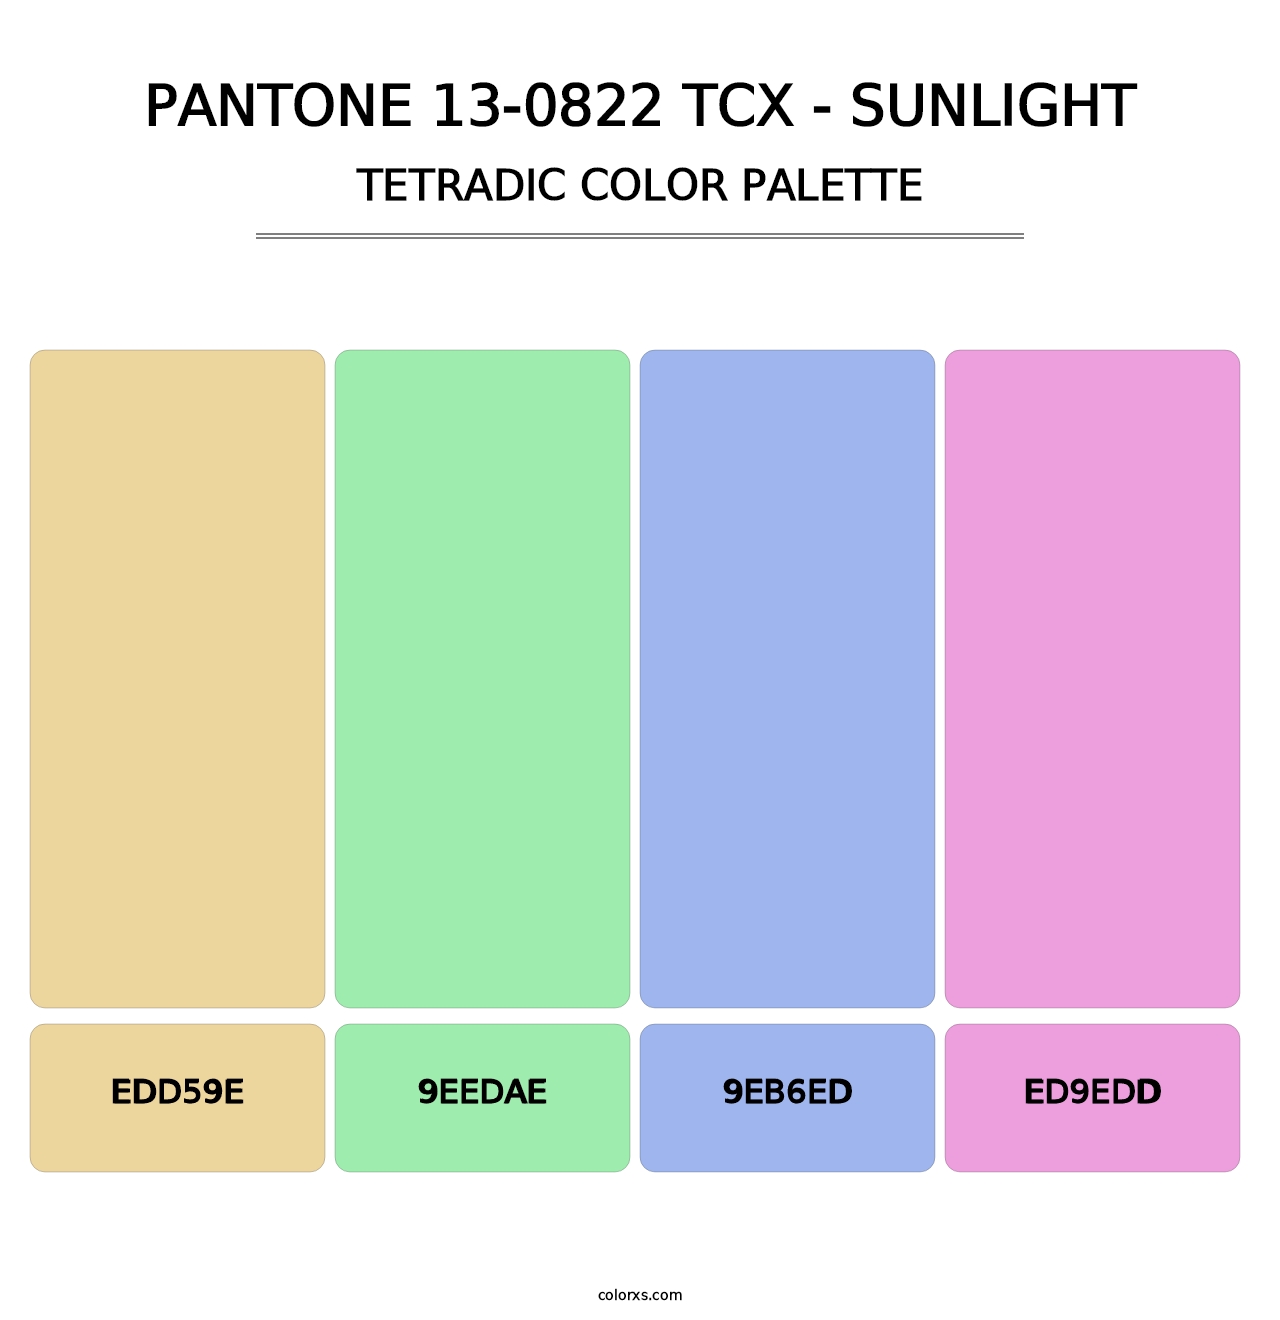 PANTONE 13-0822 TCX - Sunlight - Tetradic Color Palette